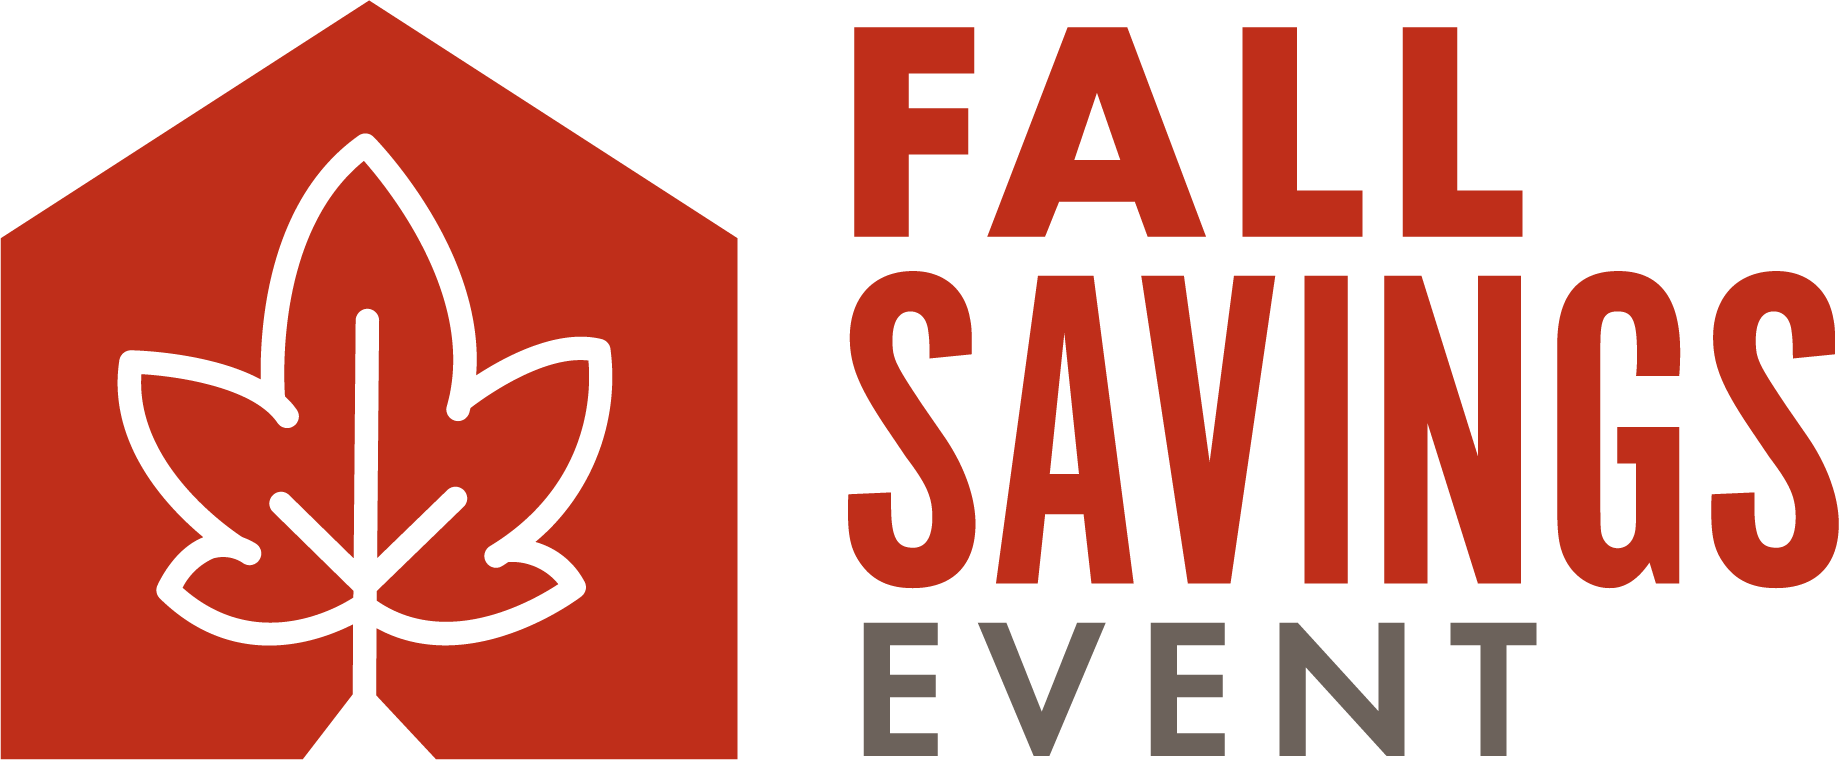 Fall Savings Event logo